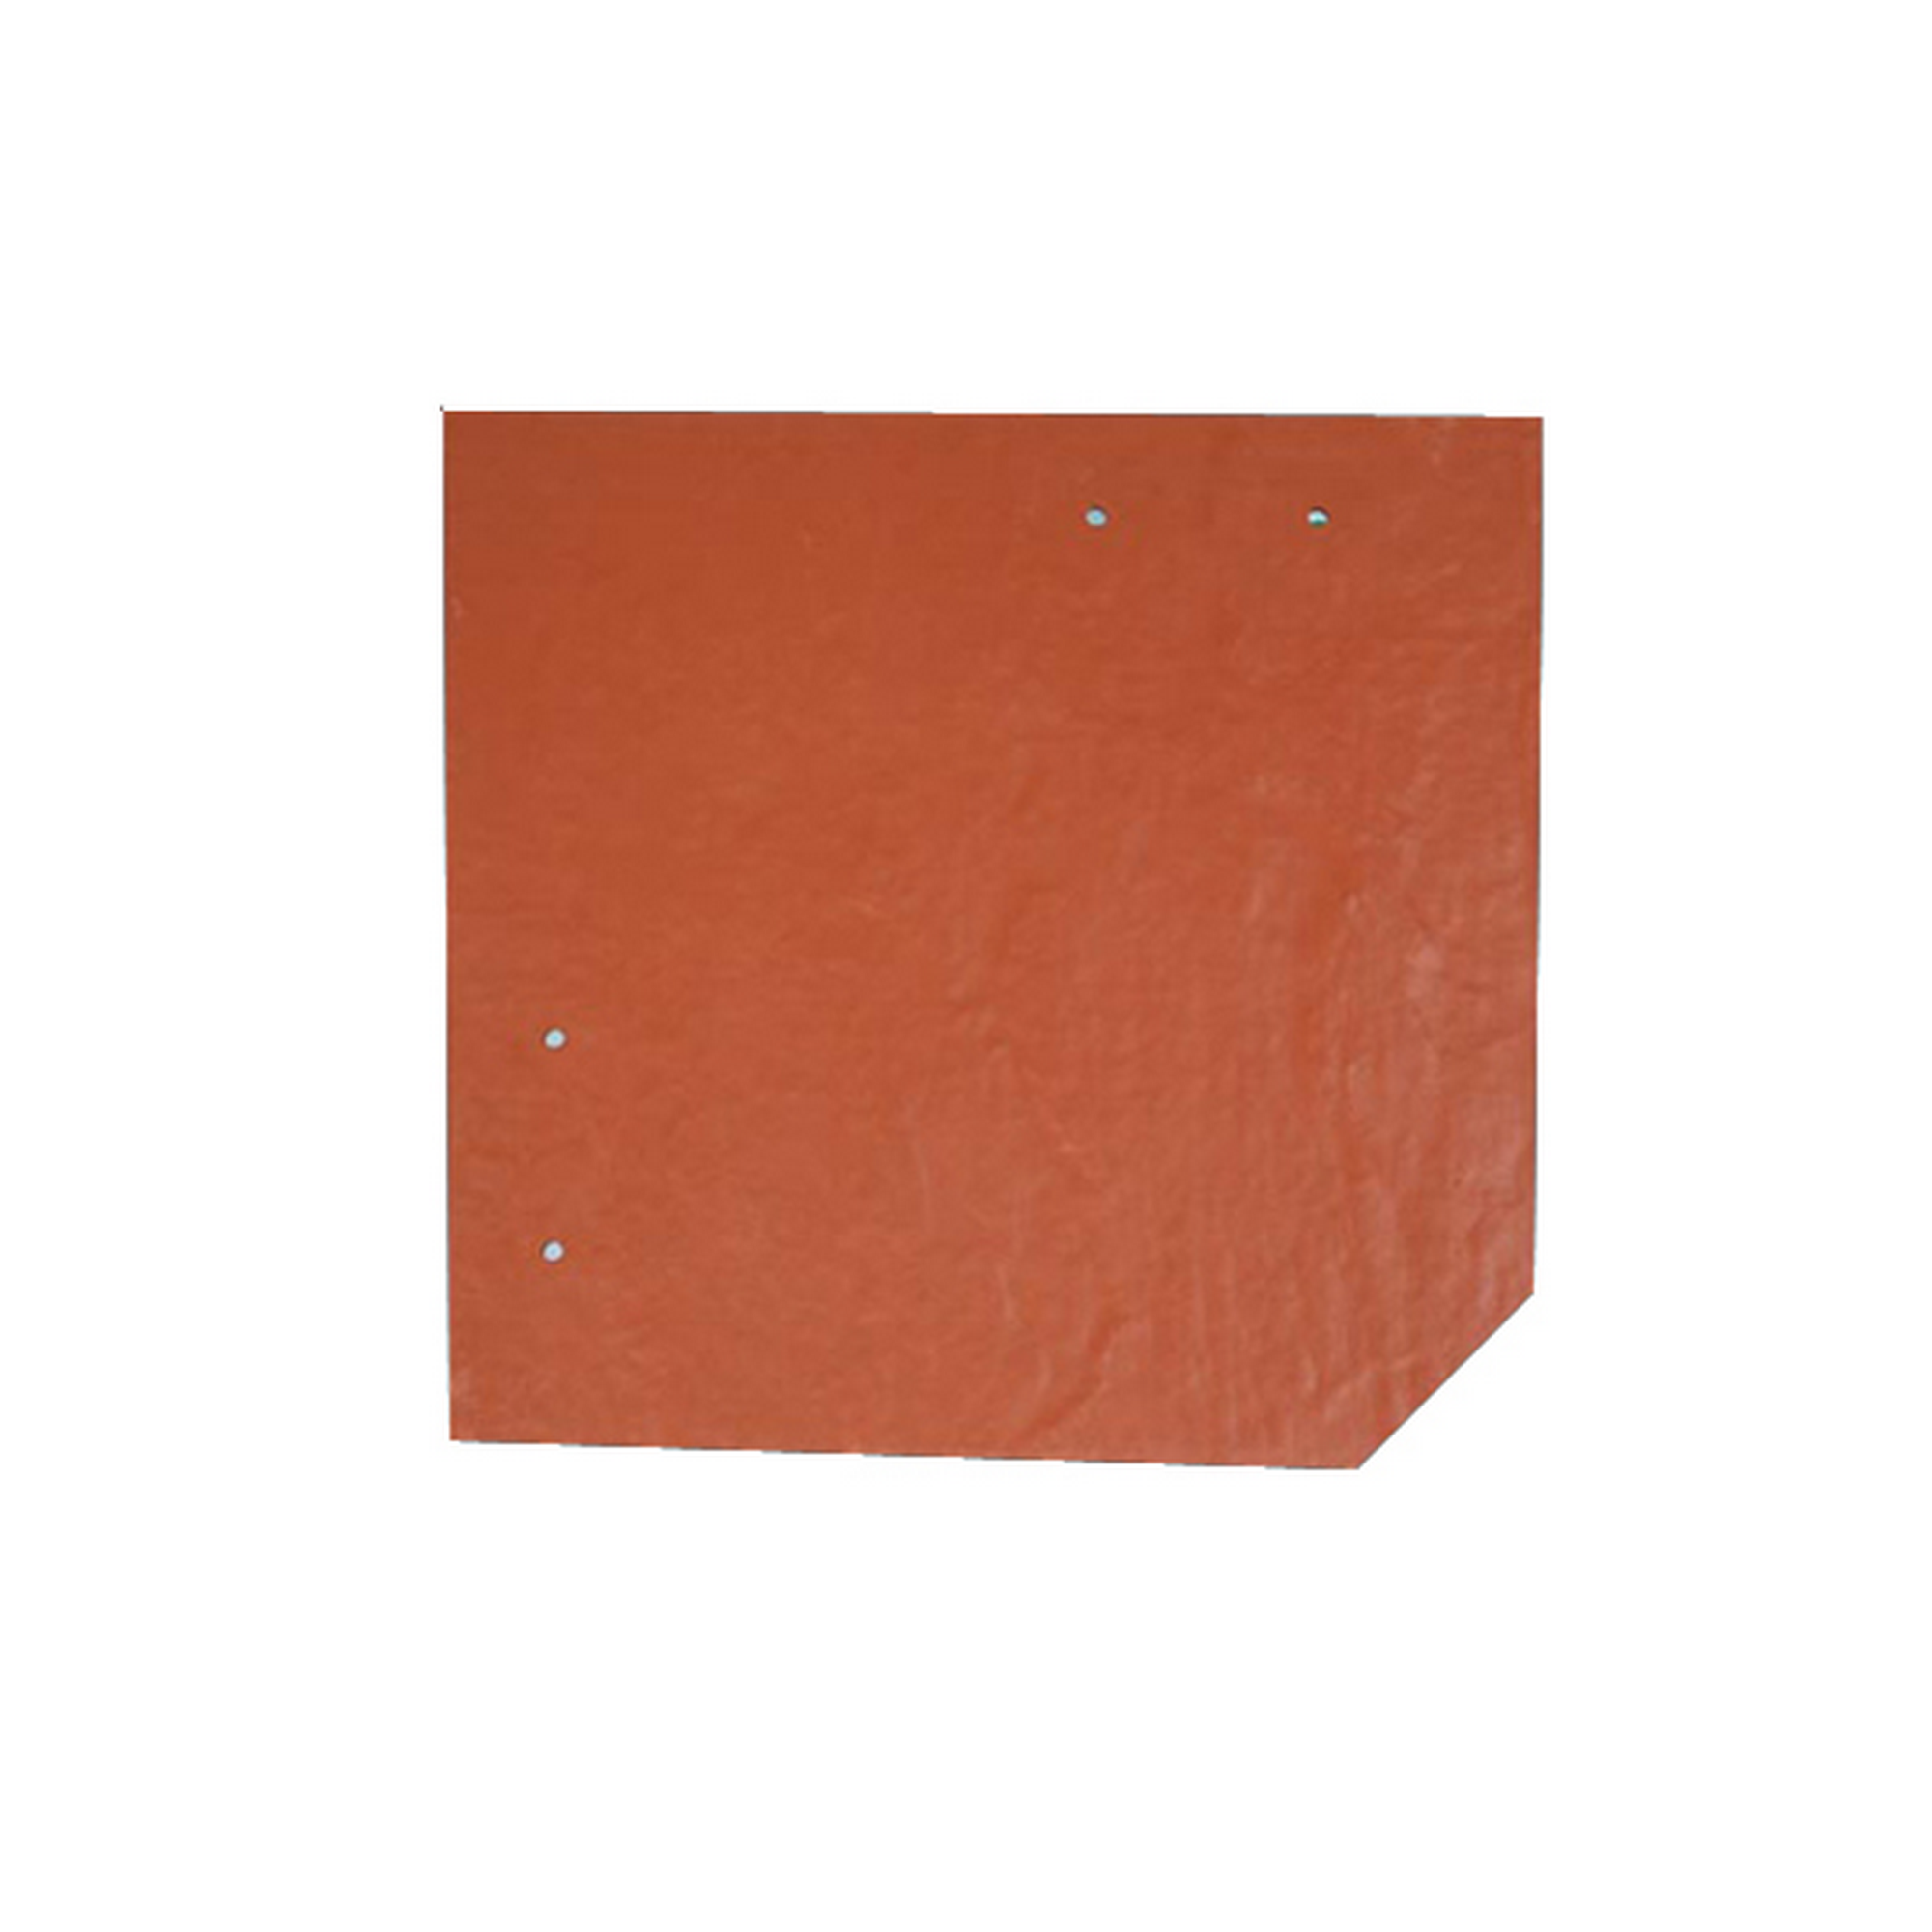 Carport 'Spreewald' rote Blende  345 x 893 cm imprägniert + product picture